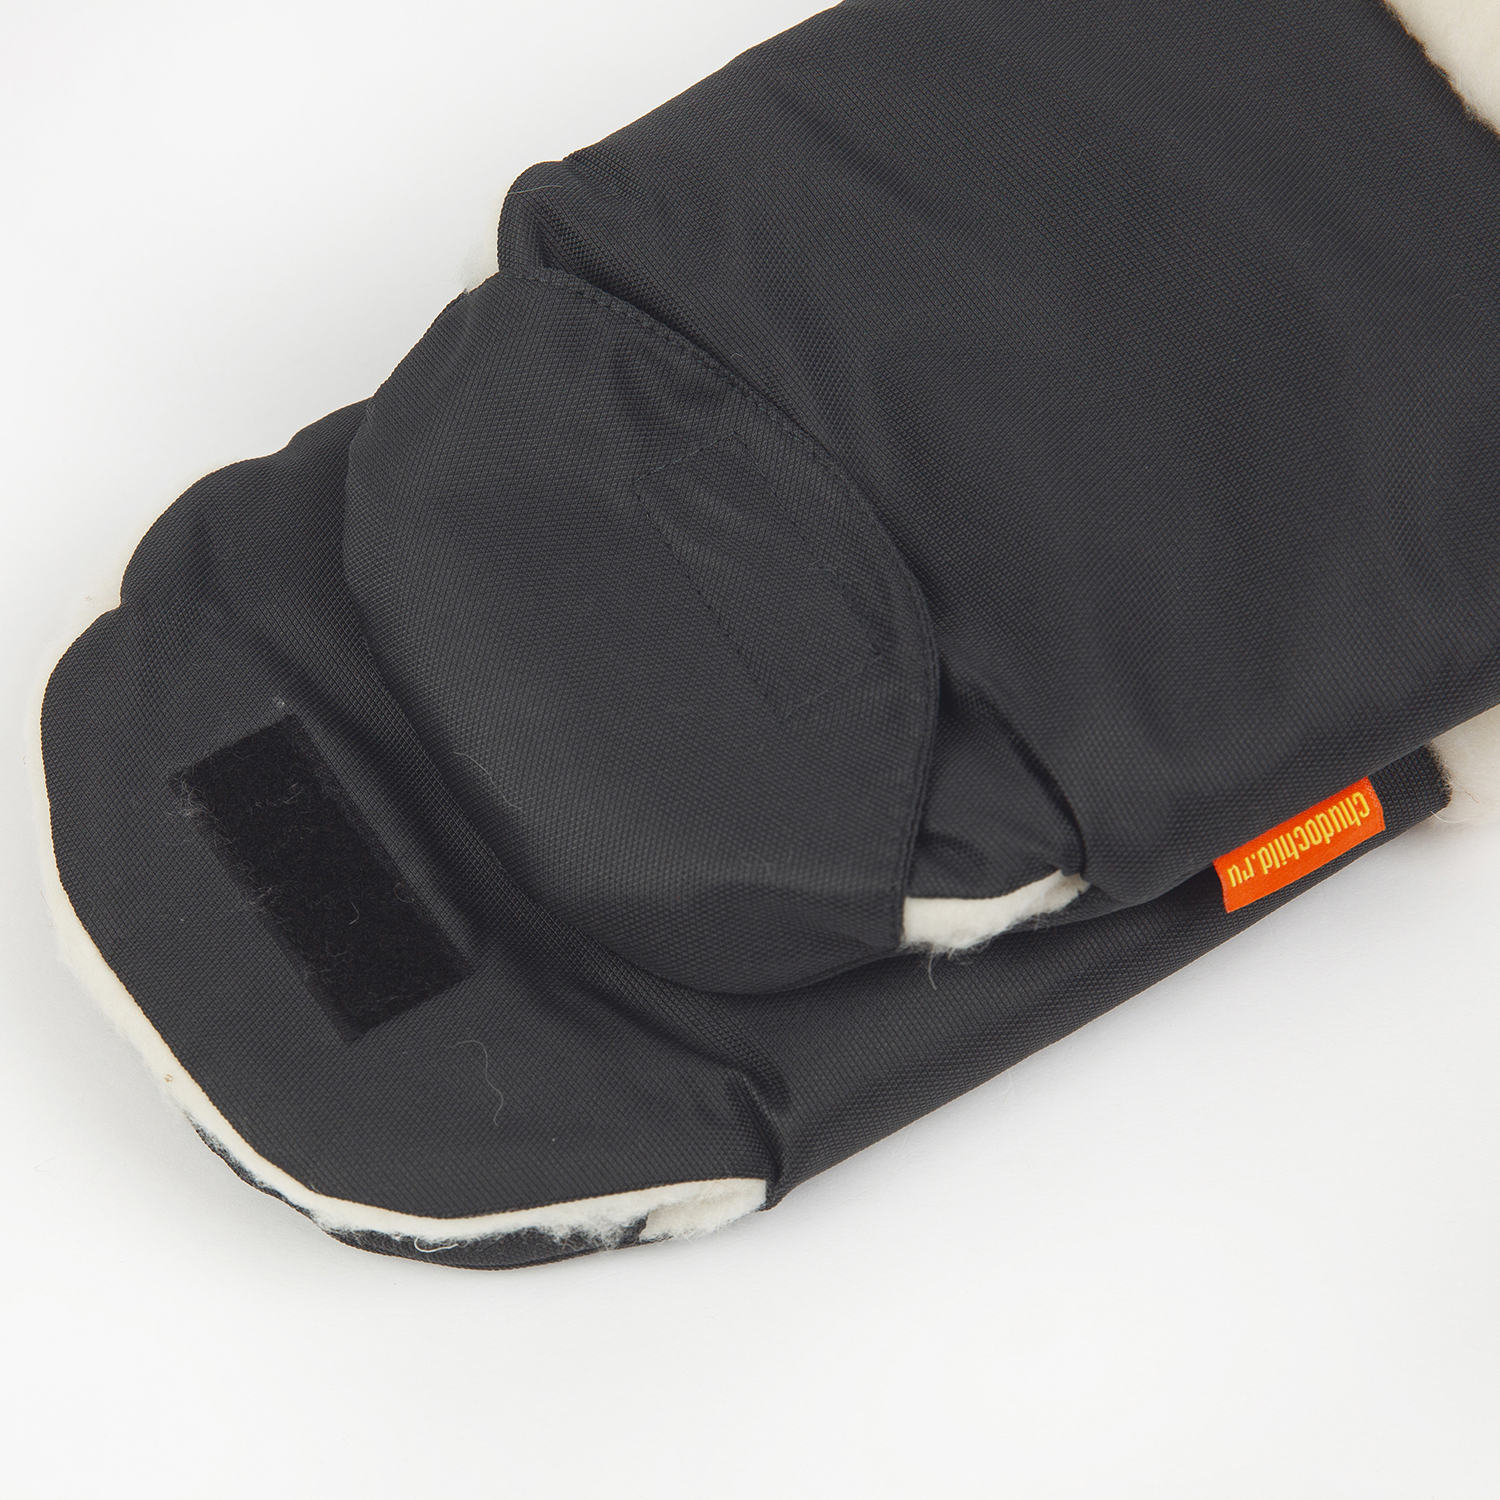 Муфта-рукавички для коляски Чудо-чадо меховая Прайм графит МРМ07-001 - фото 6